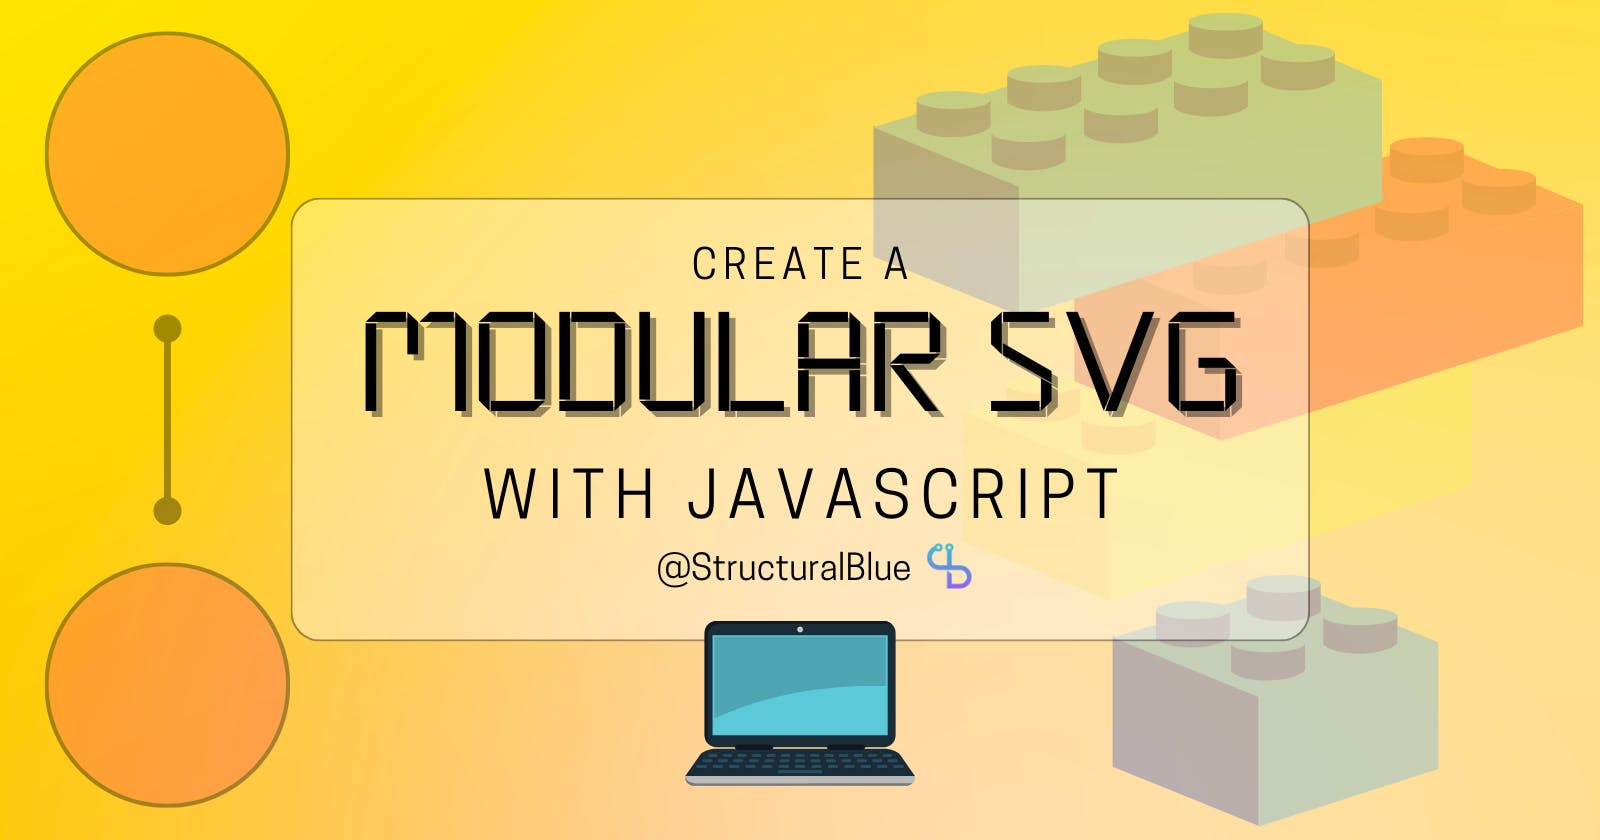 Create a modular SVG with Javascript